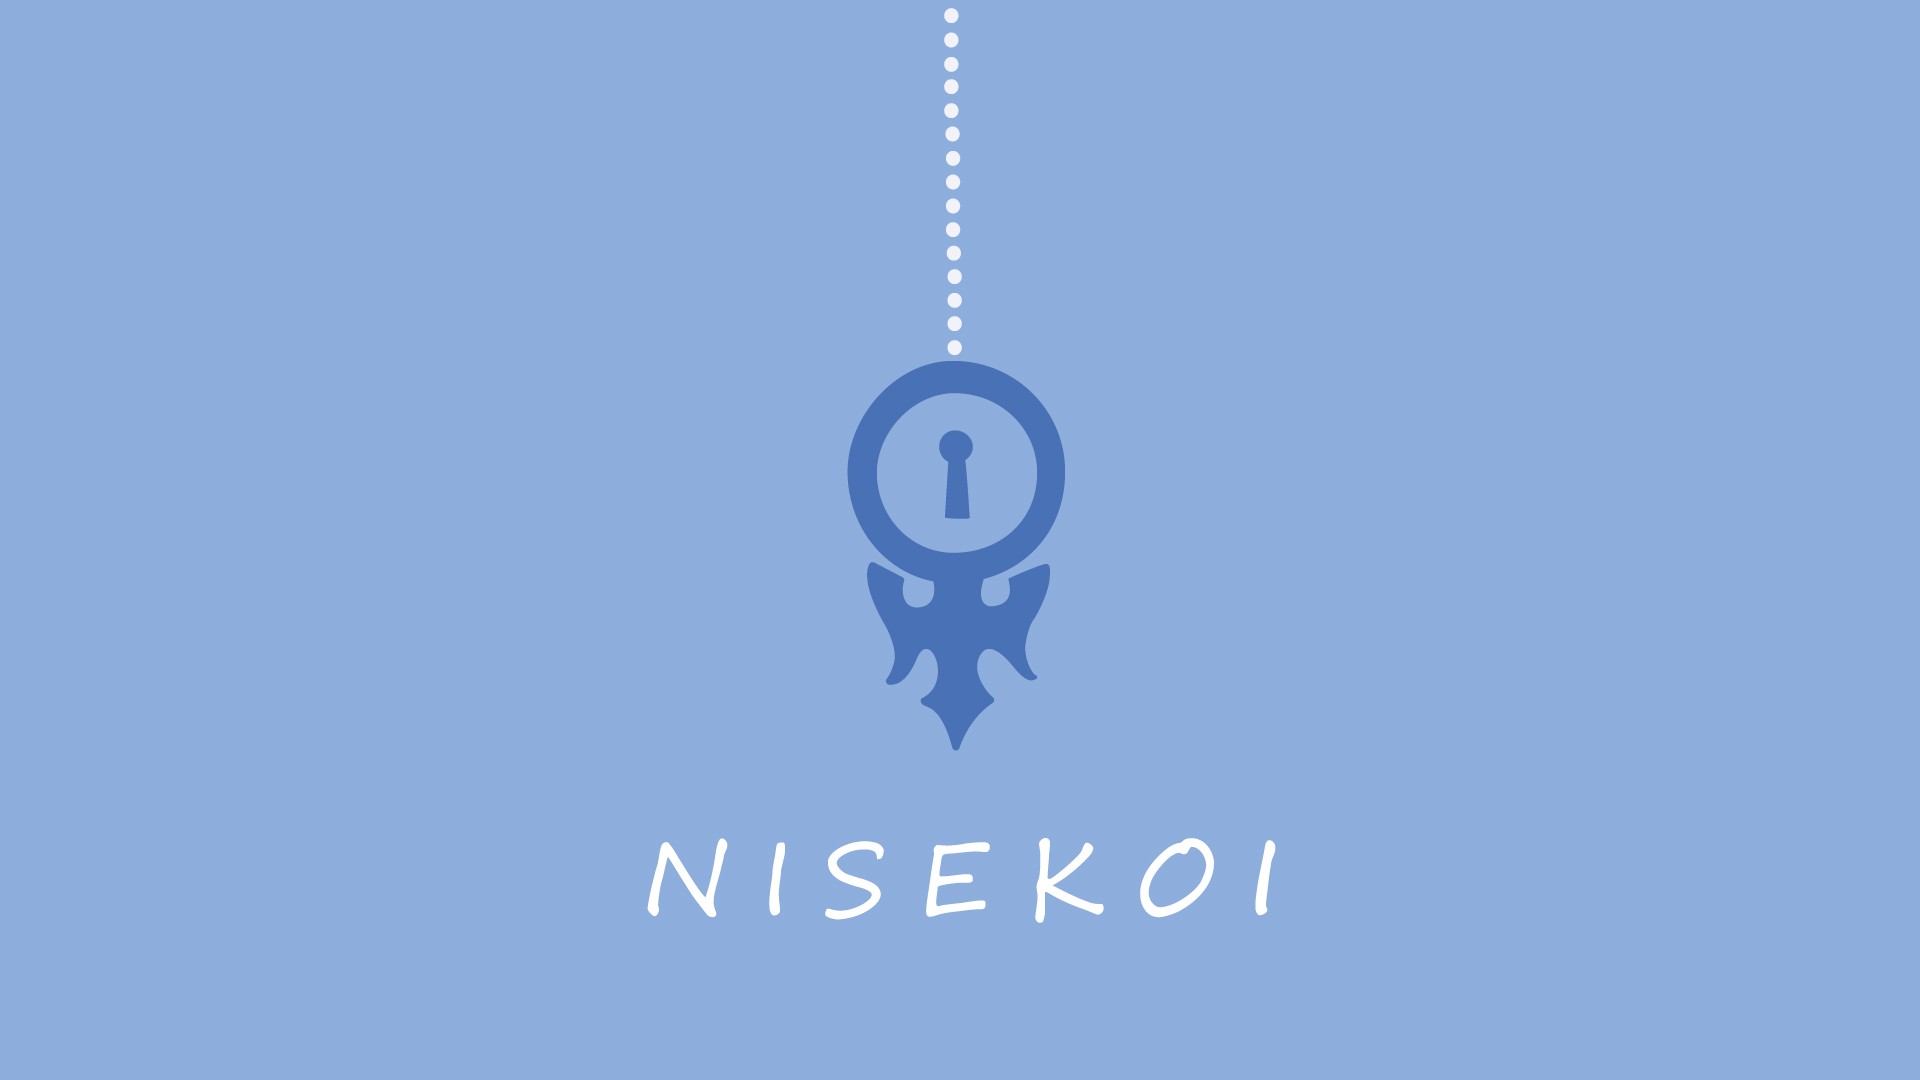 Anime 1920x1080 Nisekoi logo blue minimalism simple background